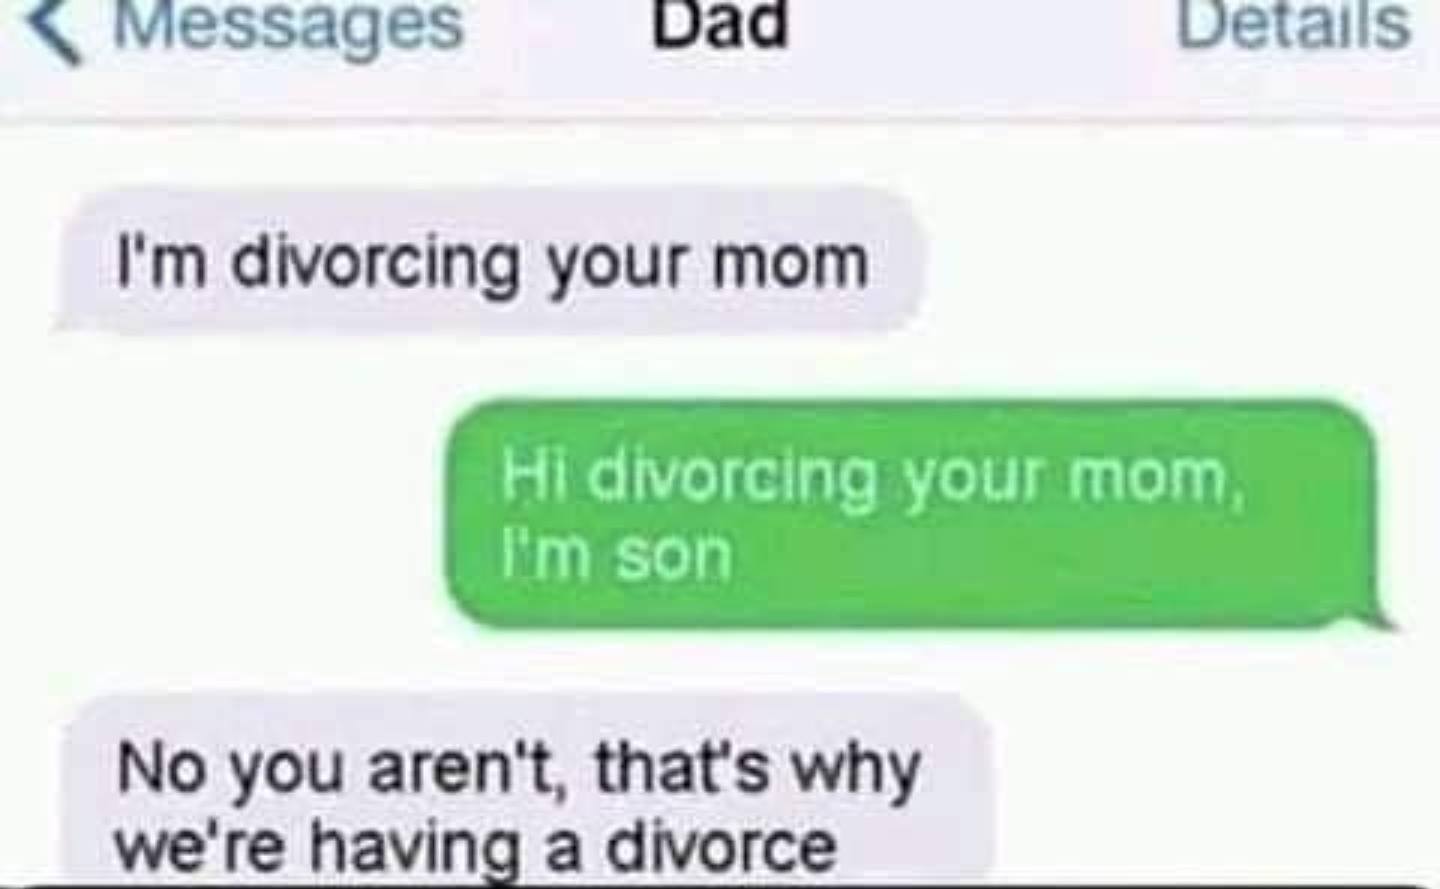 paper - Messages Dad Details I'm divorcing your mom Hi divorcing your mom I'm son No you aren't, that's why we're having a divorce